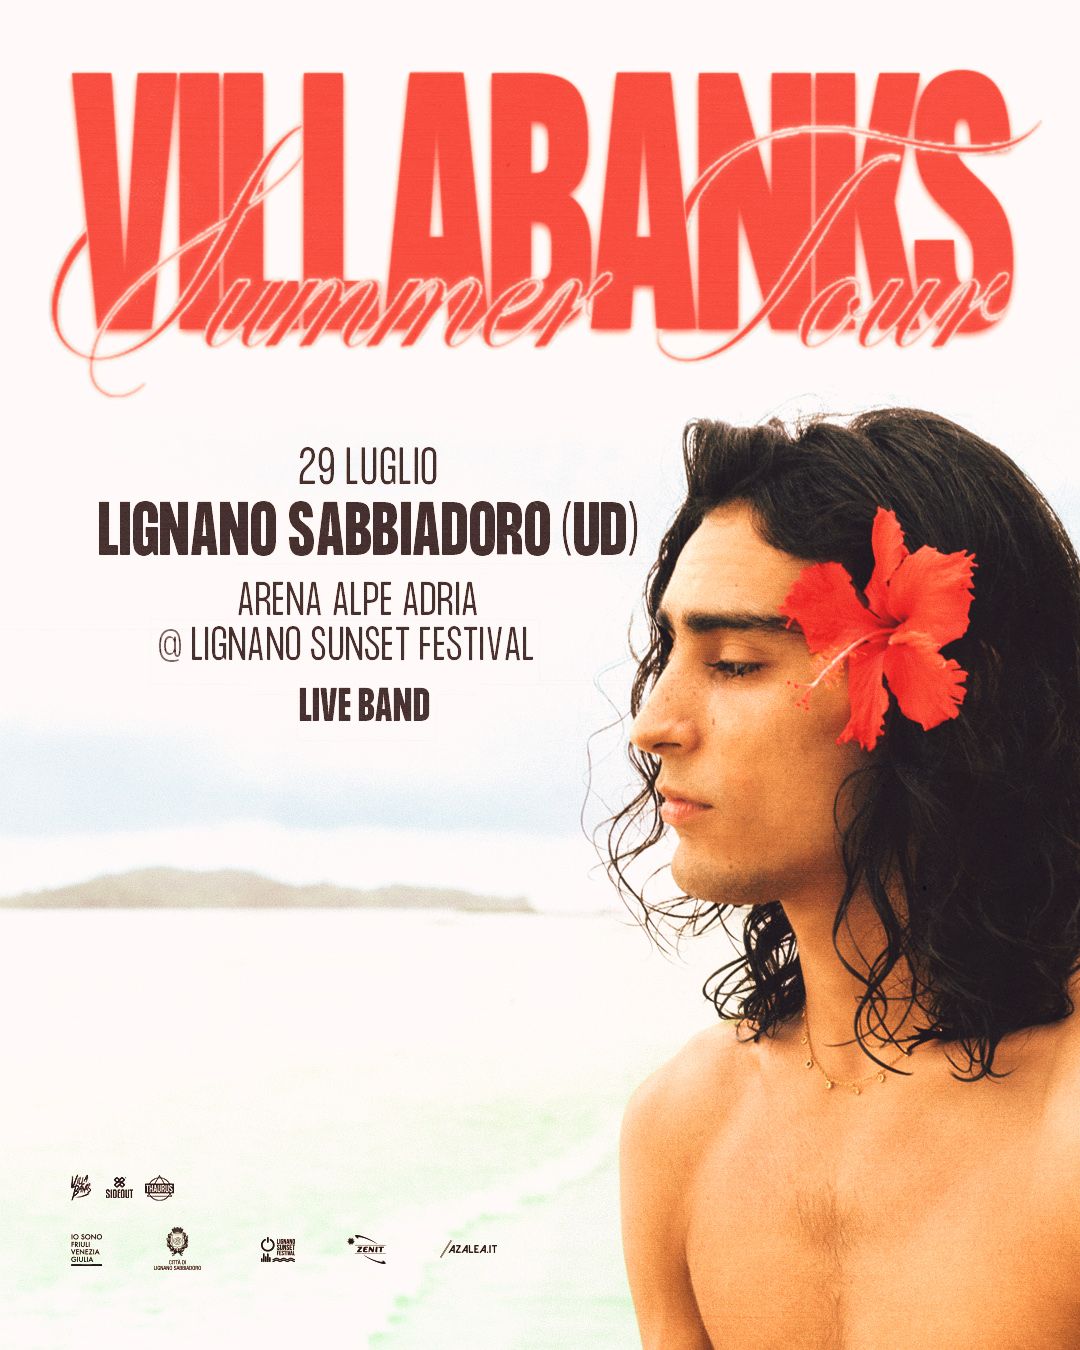 VILLABANKS “Summer Tour” Sabato 29 luglio 2023, ore 21.30 LIGNANO SABBIADORO, Arena Alpe Adria